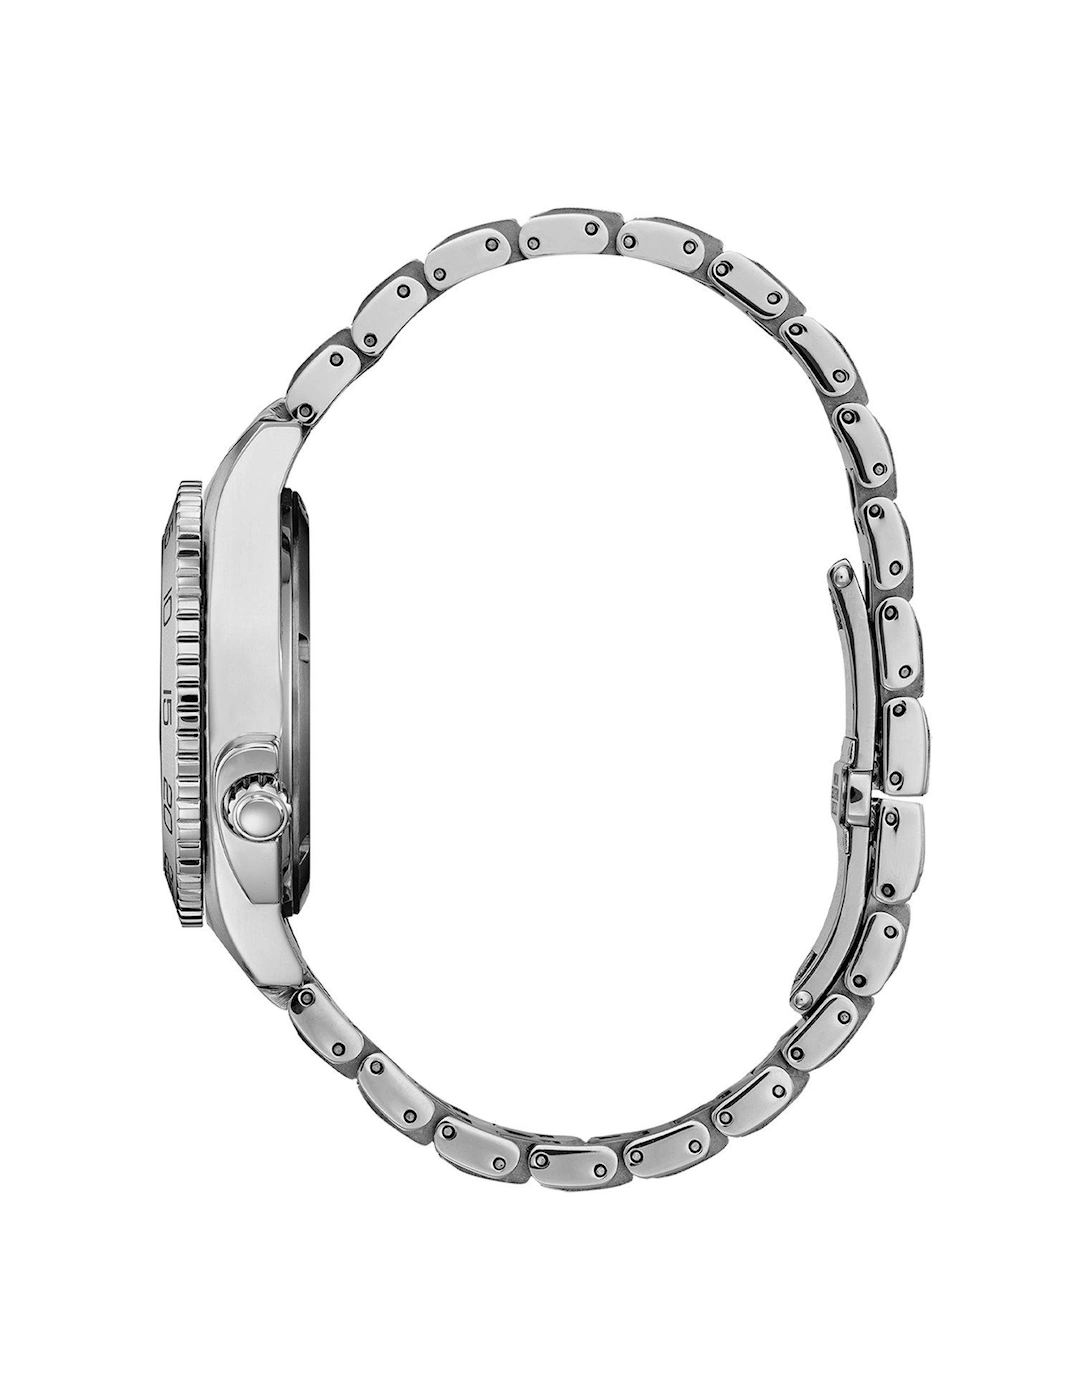 LADIES ECO-DRIVE BRACELET Stainless steel bracelet